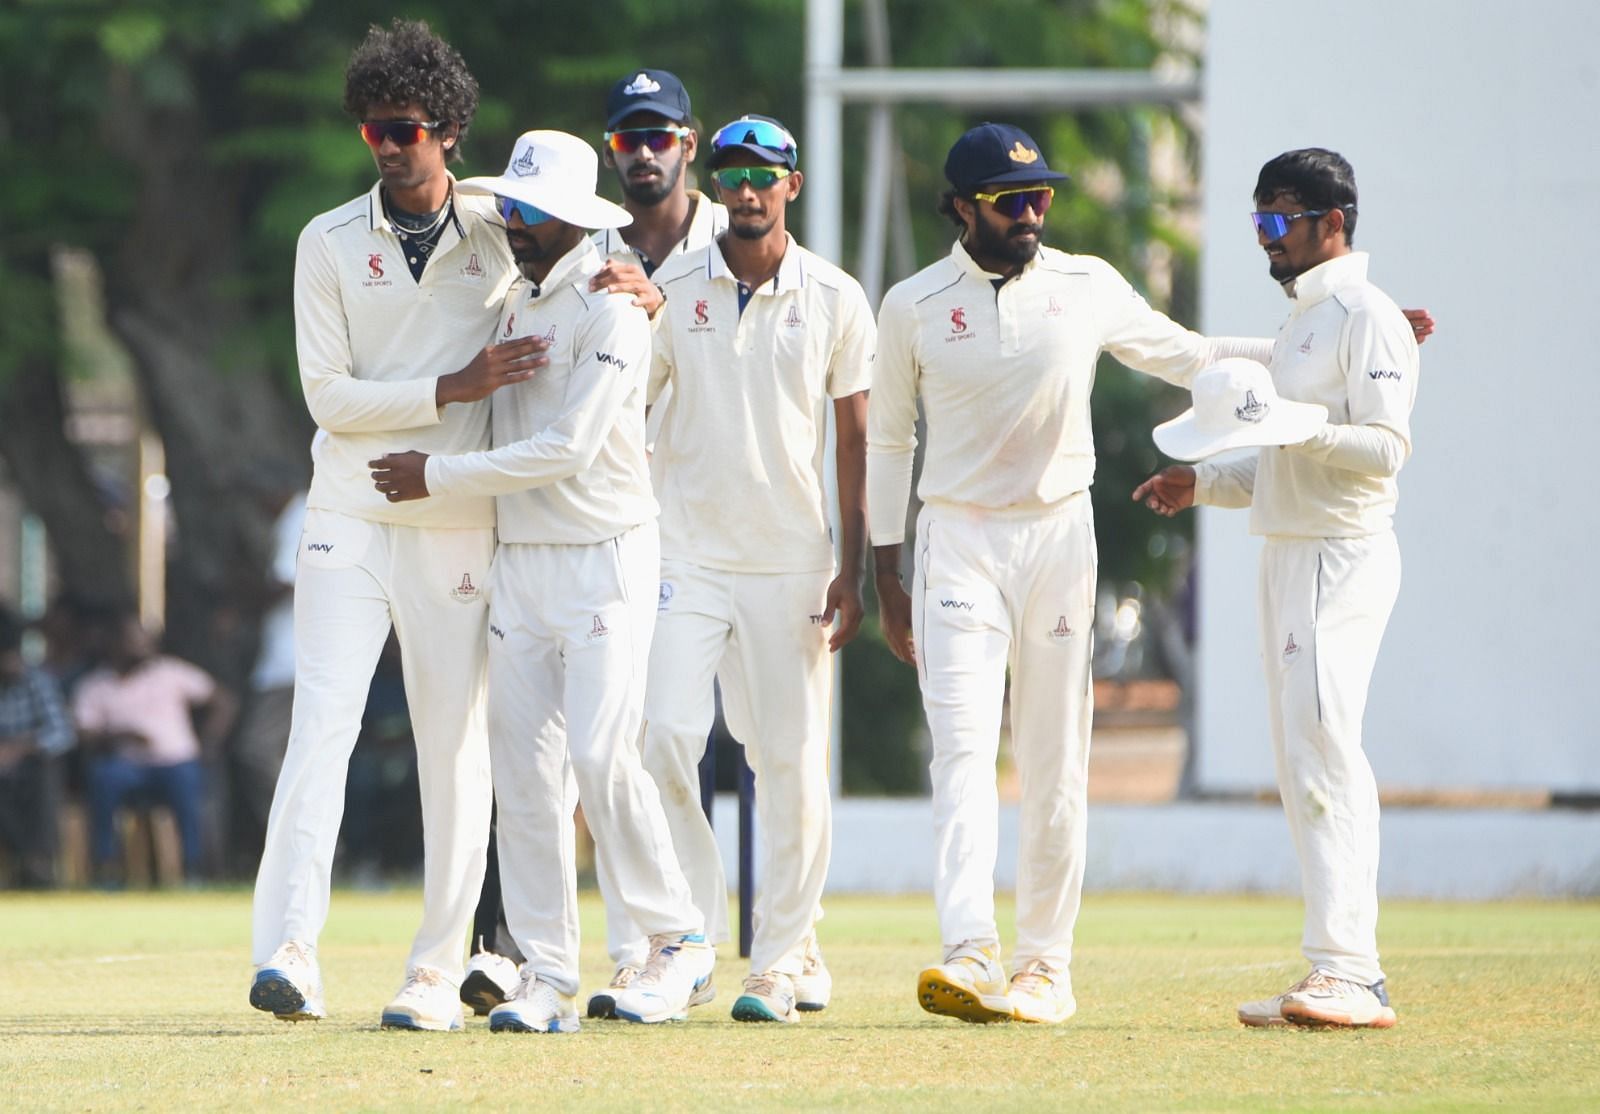 Sai Kishore took 53 wickets in the season helping his team reaching Ranji Semifinals.